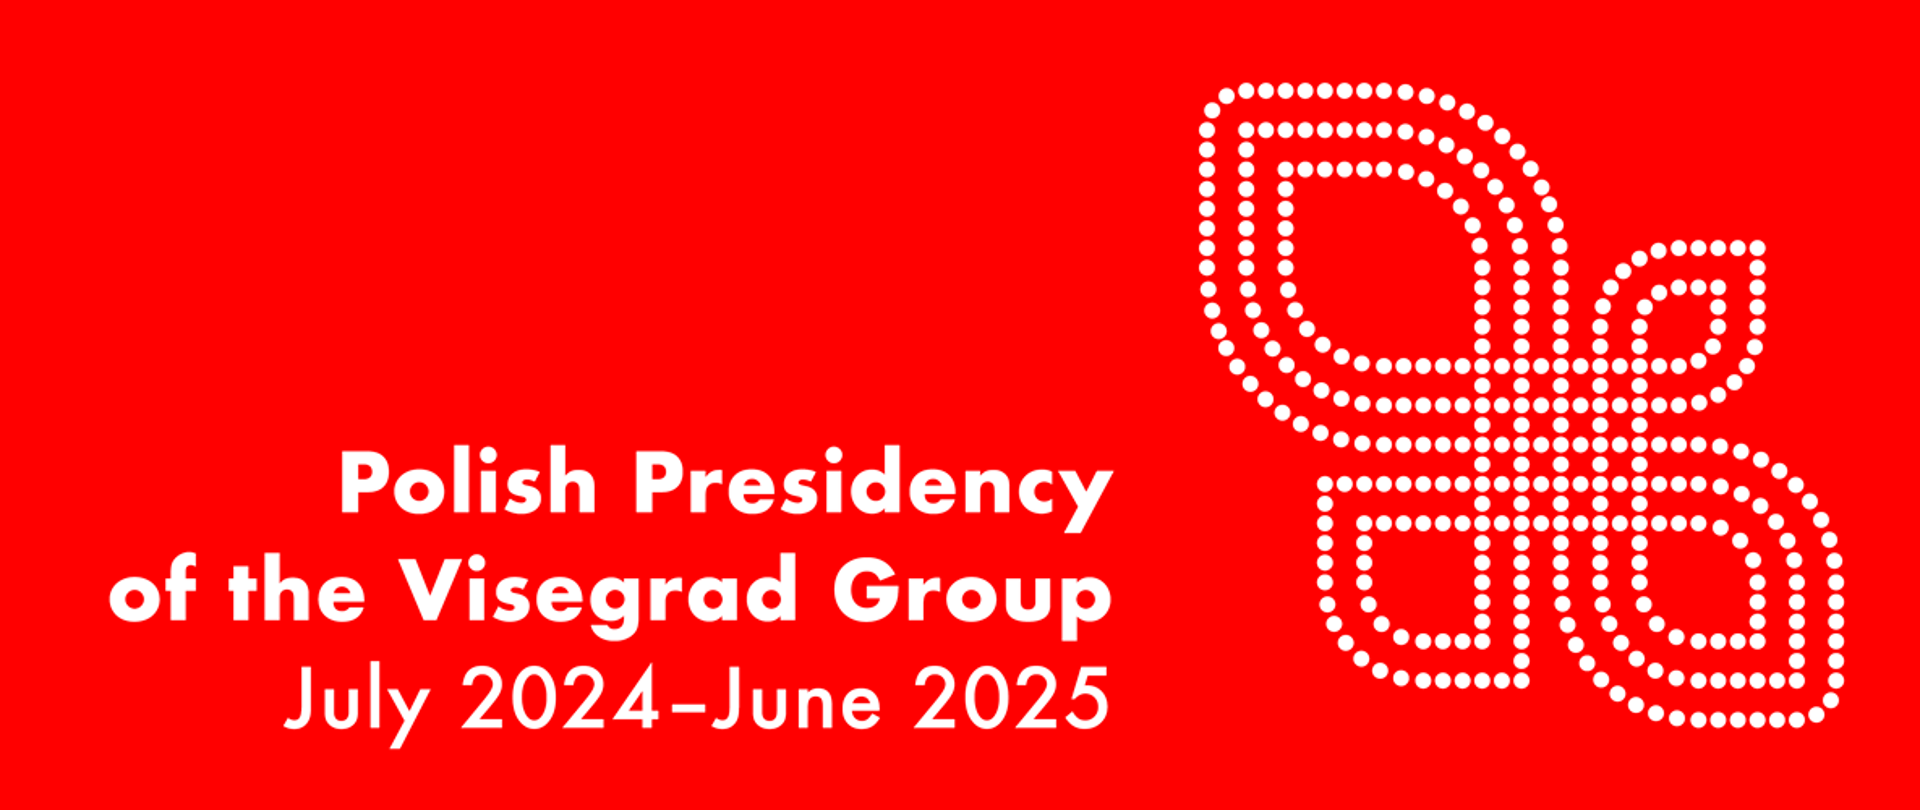 Polish Presidency of the Visegrad Group (V4)